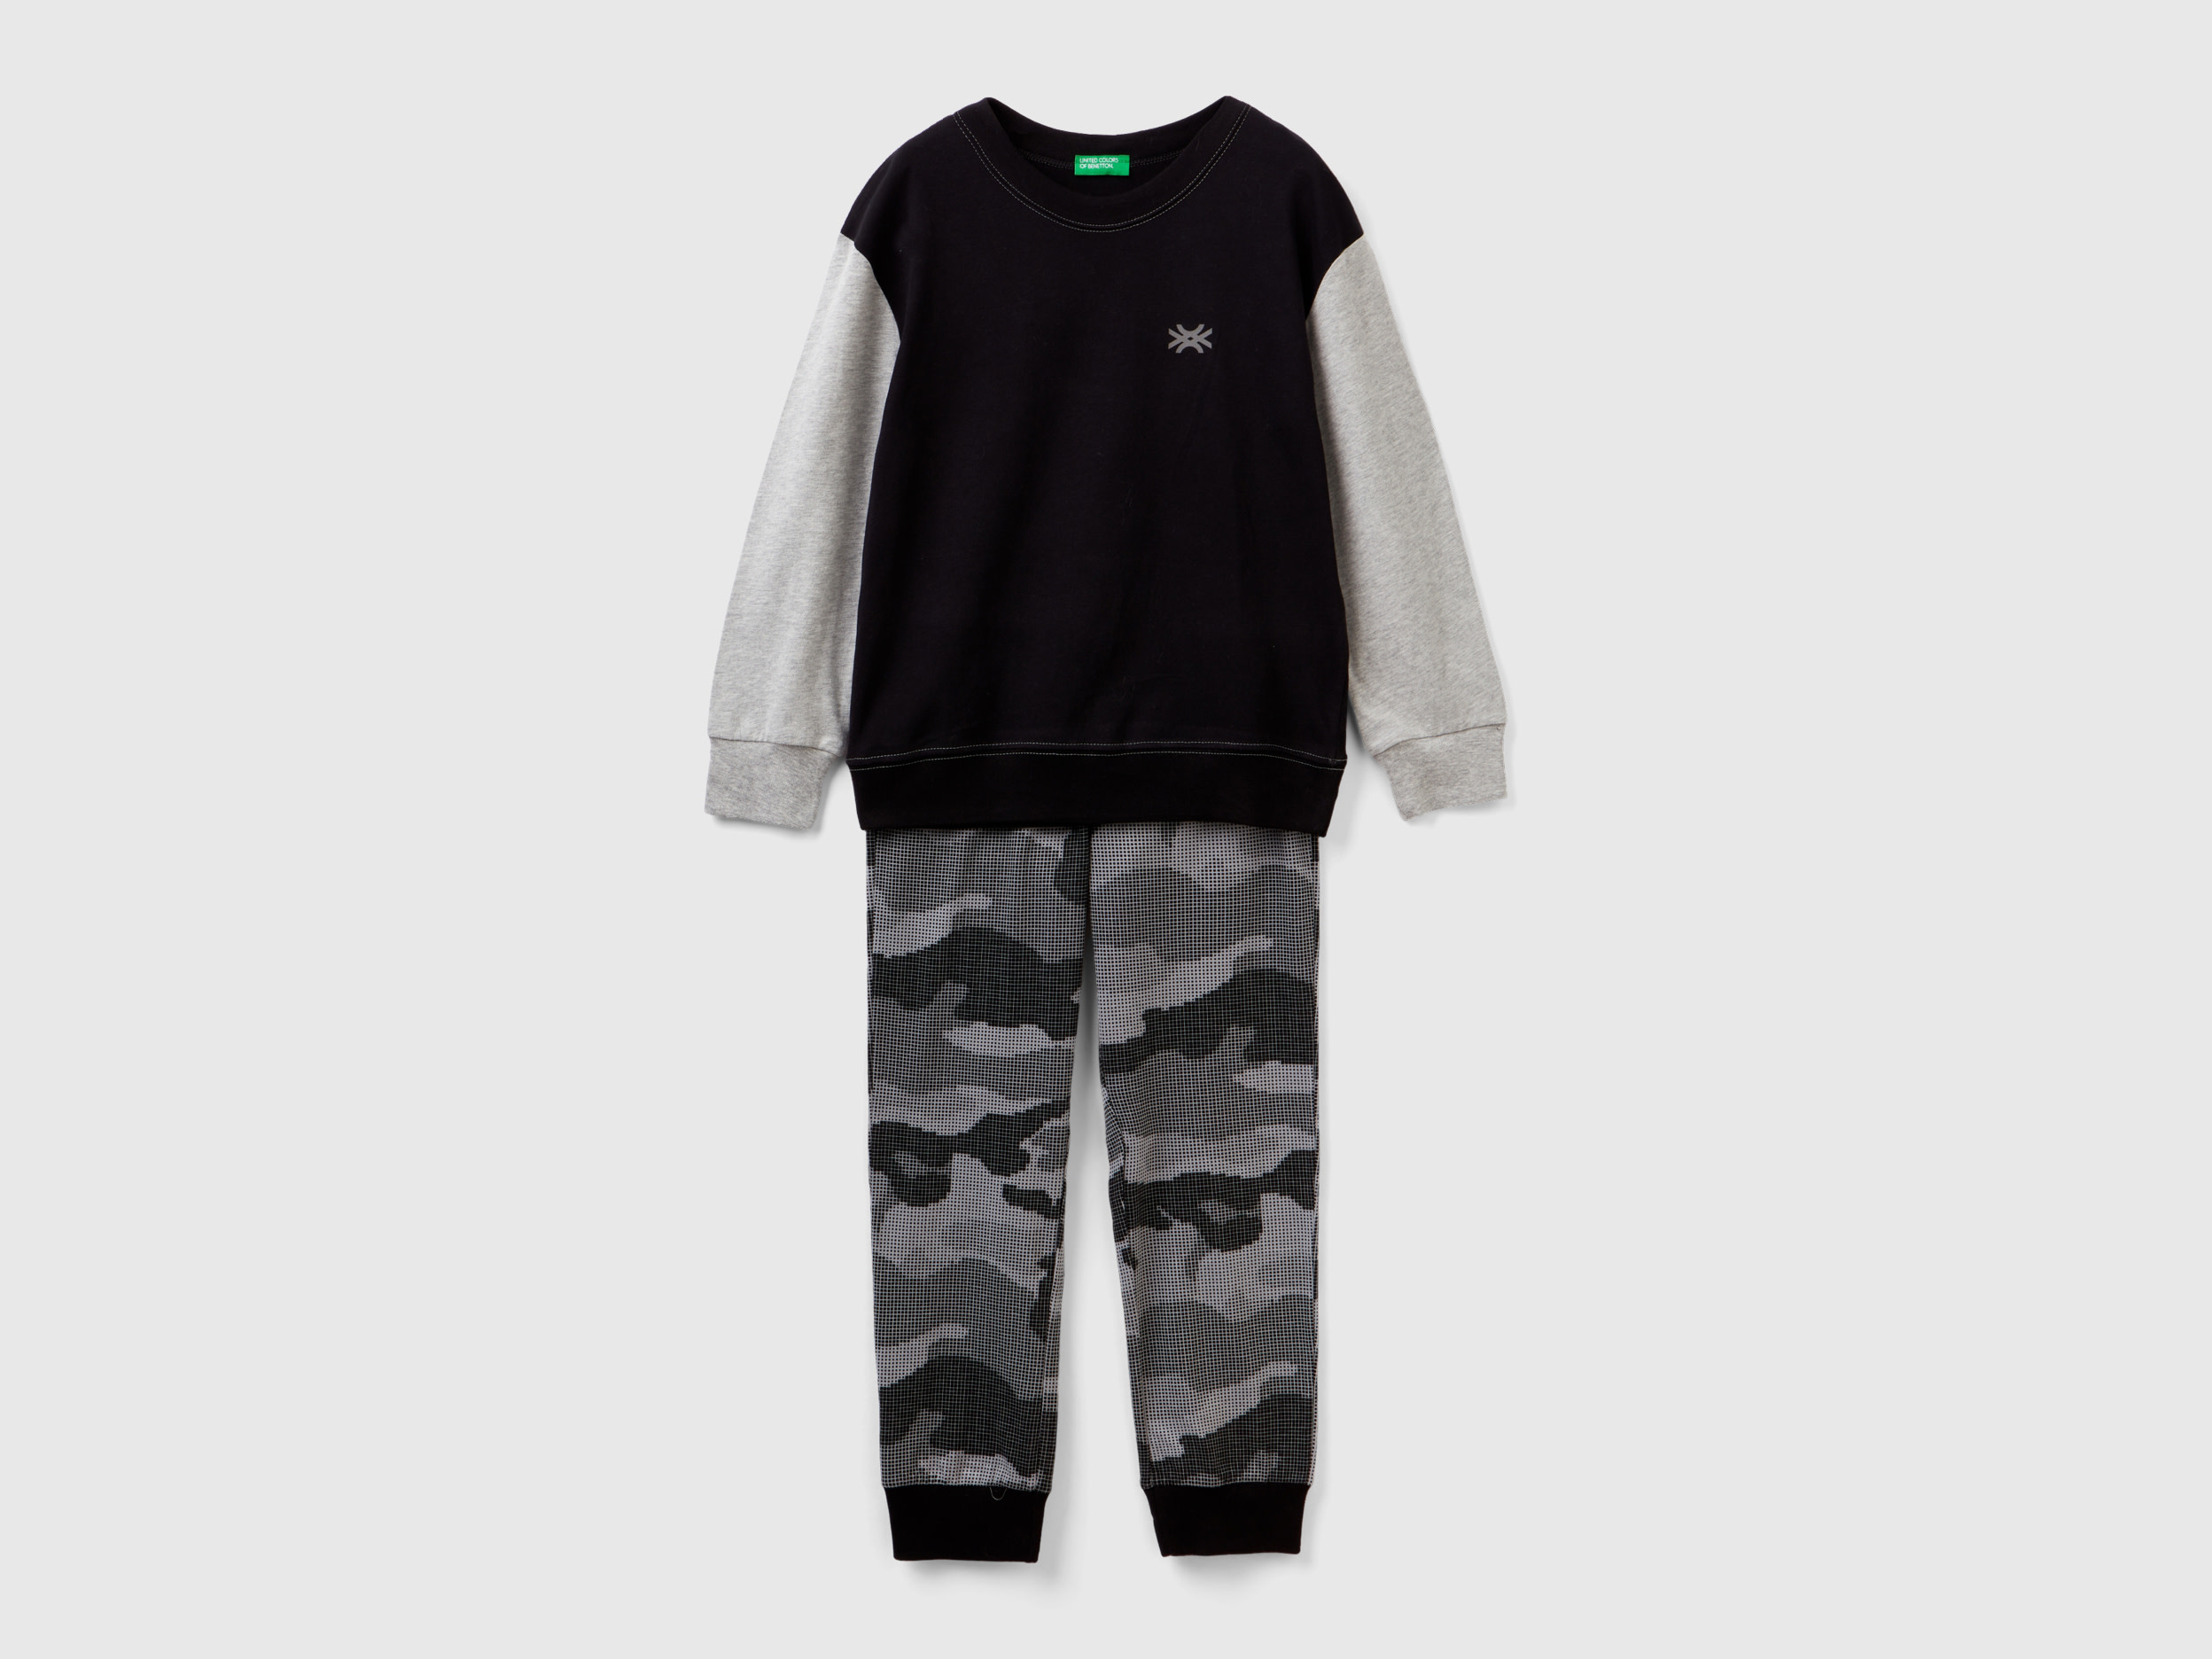 Benetton, Pyjamas With Camouflage Bottoms, size 18-24, Black, Kids